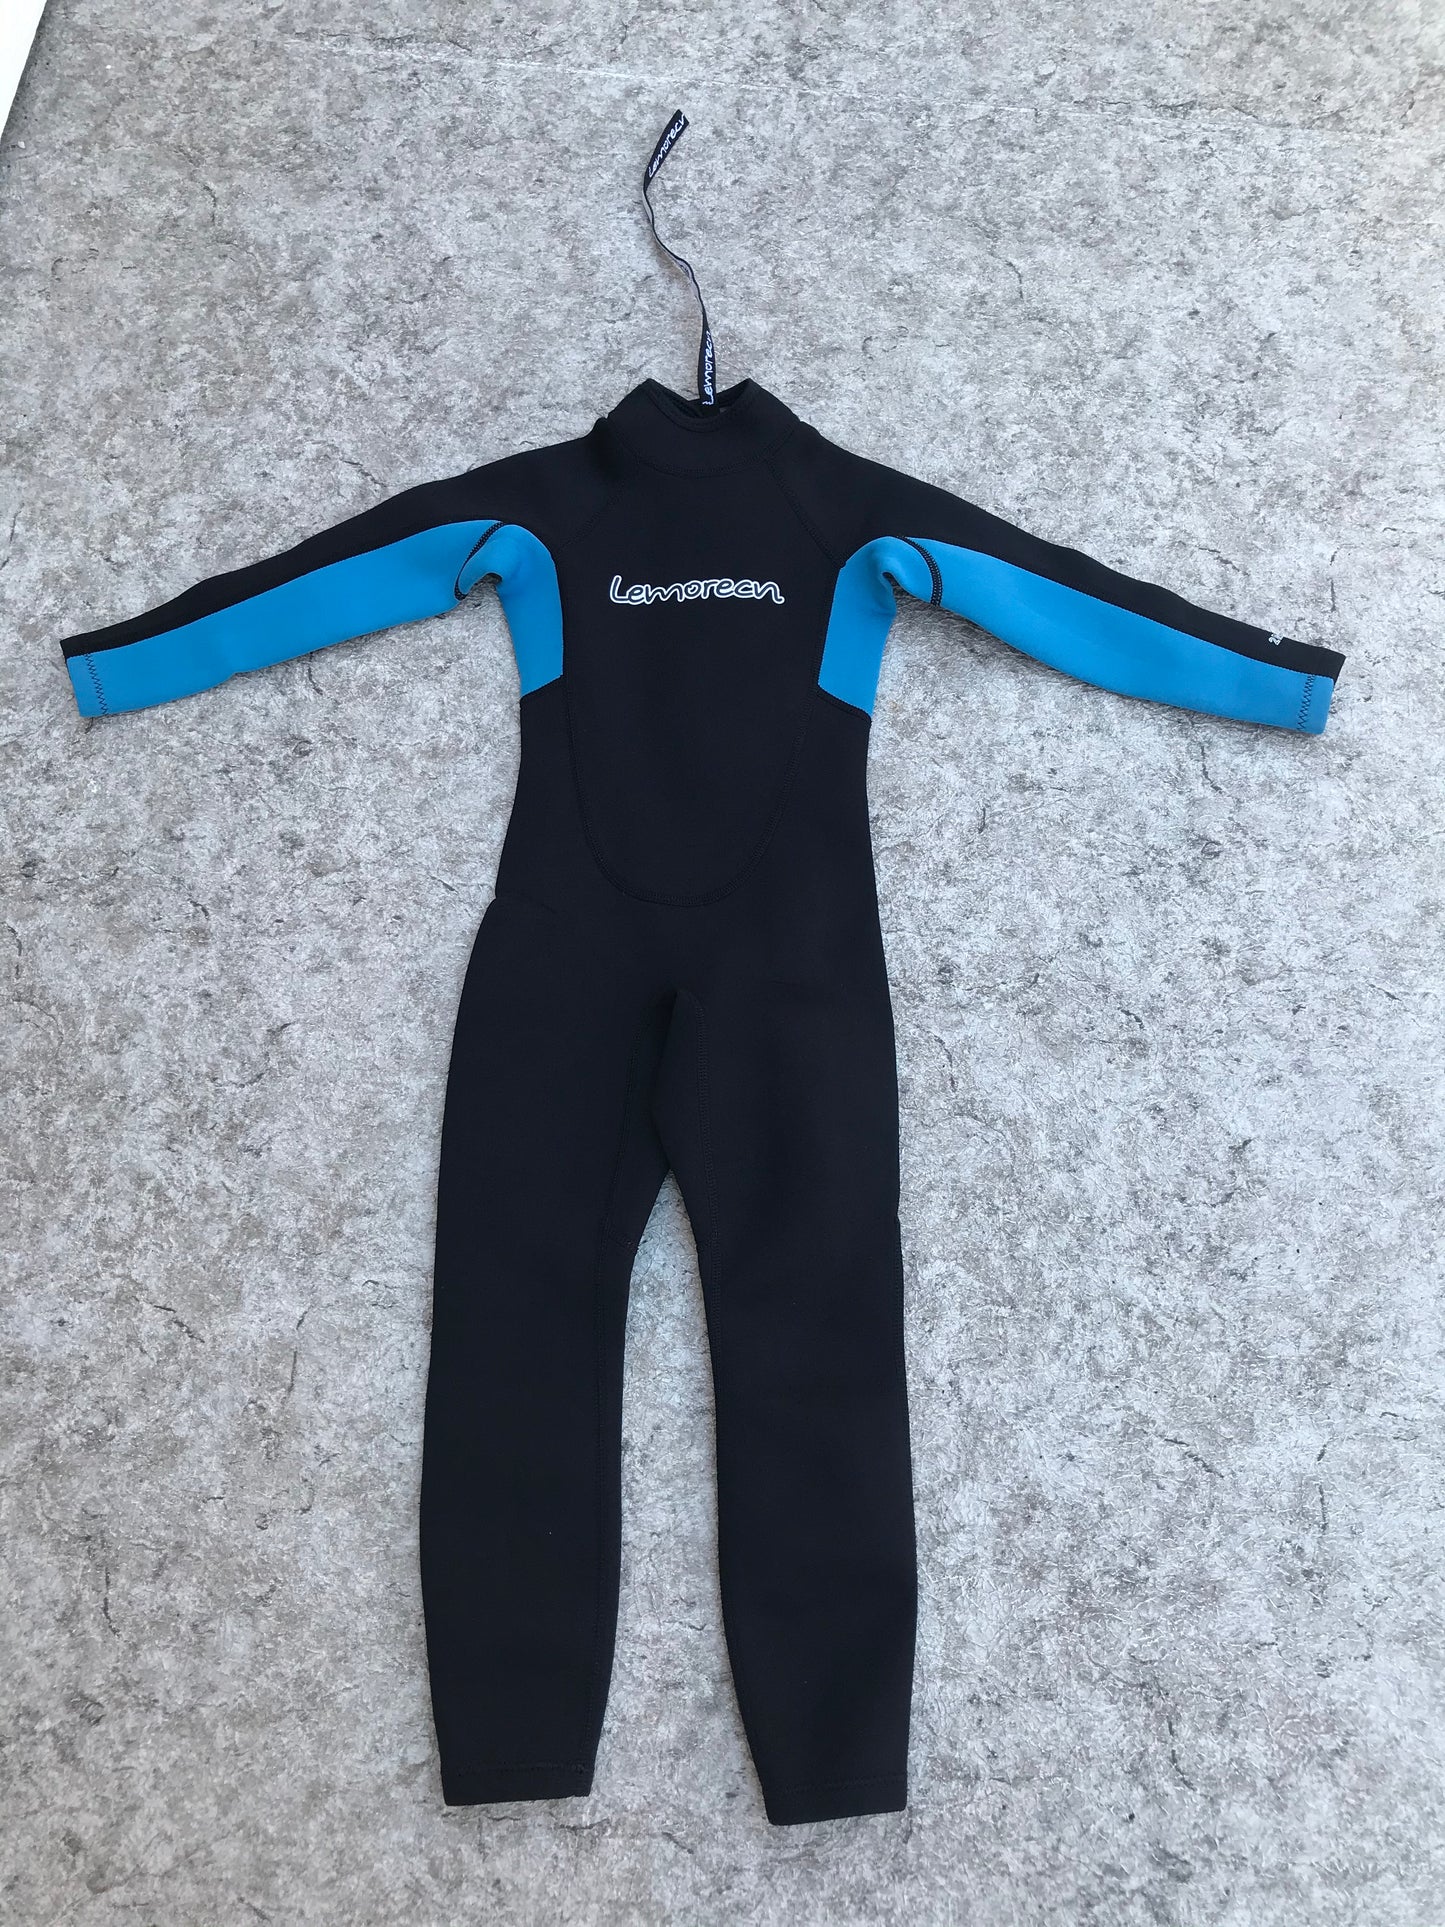 Wetsuit Child Size  4-6 Full 2-3 mm Neoprene Black Blue Excellent